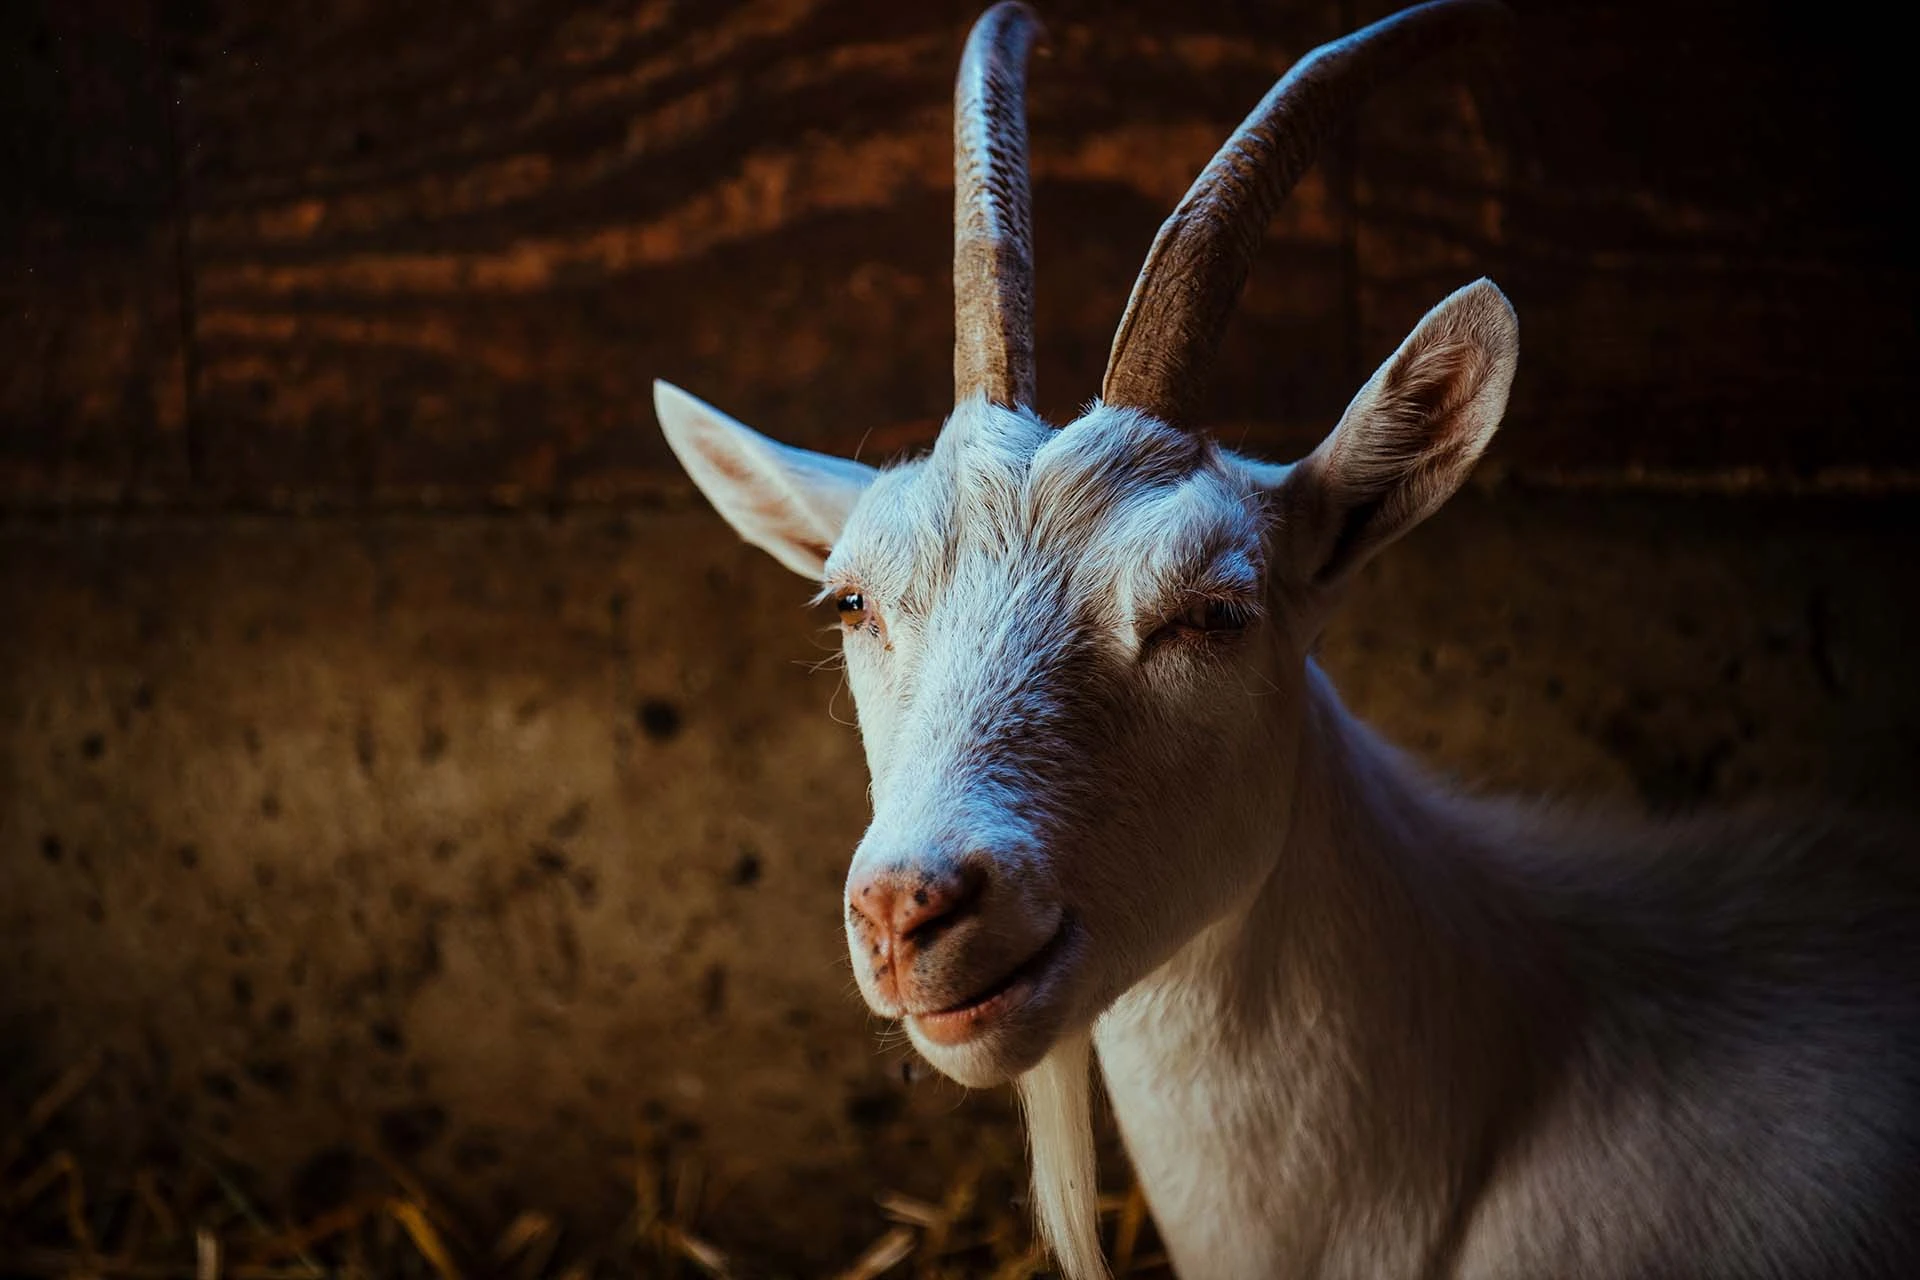 Rescued goat at Refuge RR animal sanctuary in Alexandria, Ontario